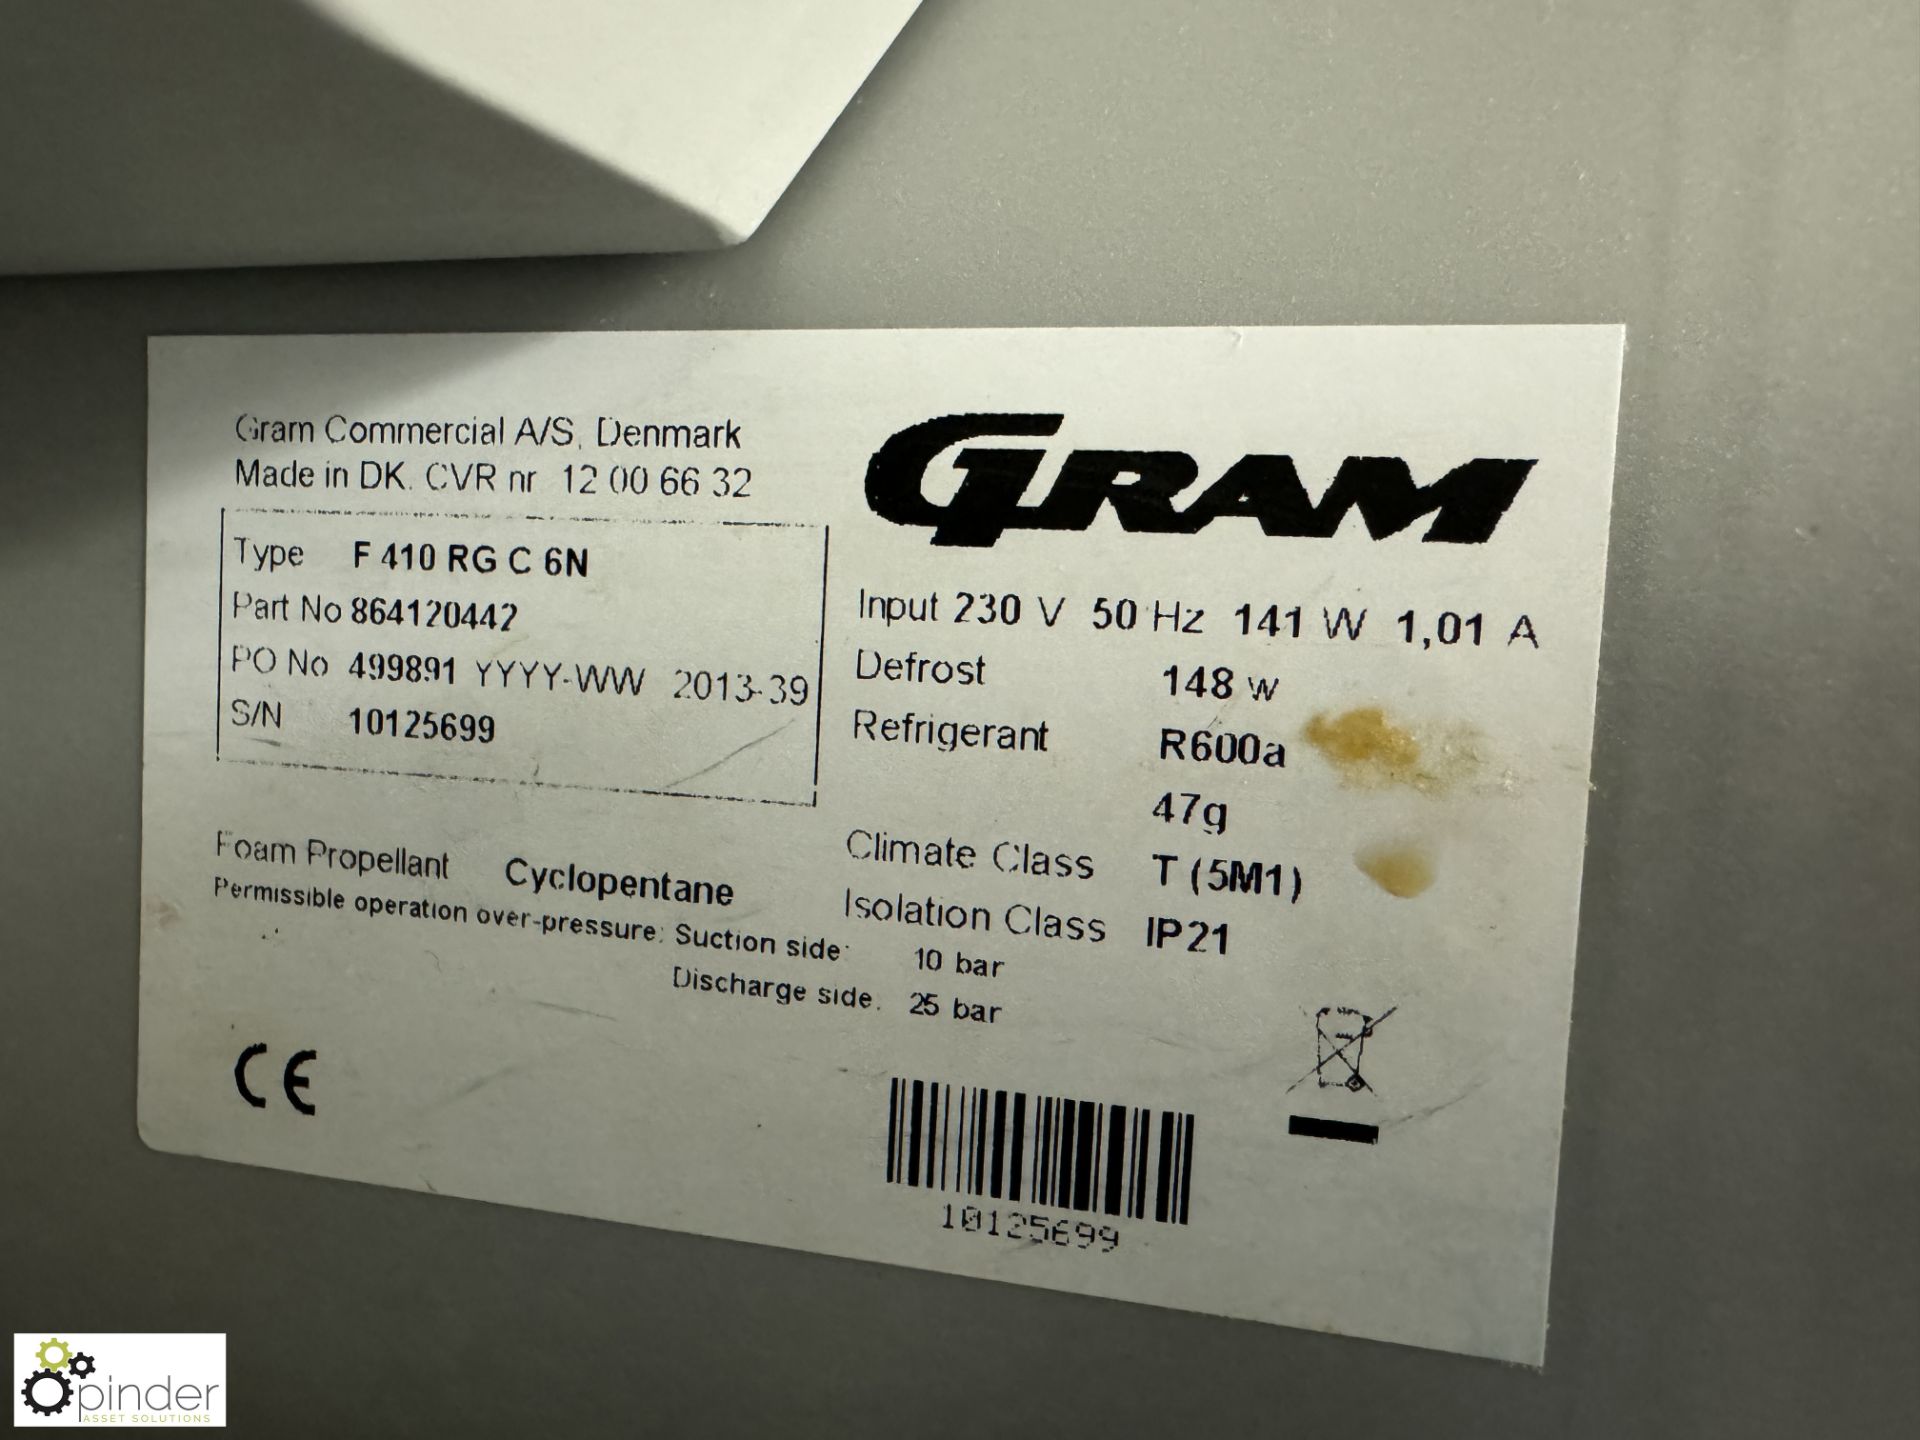 Gram F410 RGC 6N mobile stainless steel single door Freezer, 240volts, 600mm x 650mm x 1900mm ( - Image 4 of 5